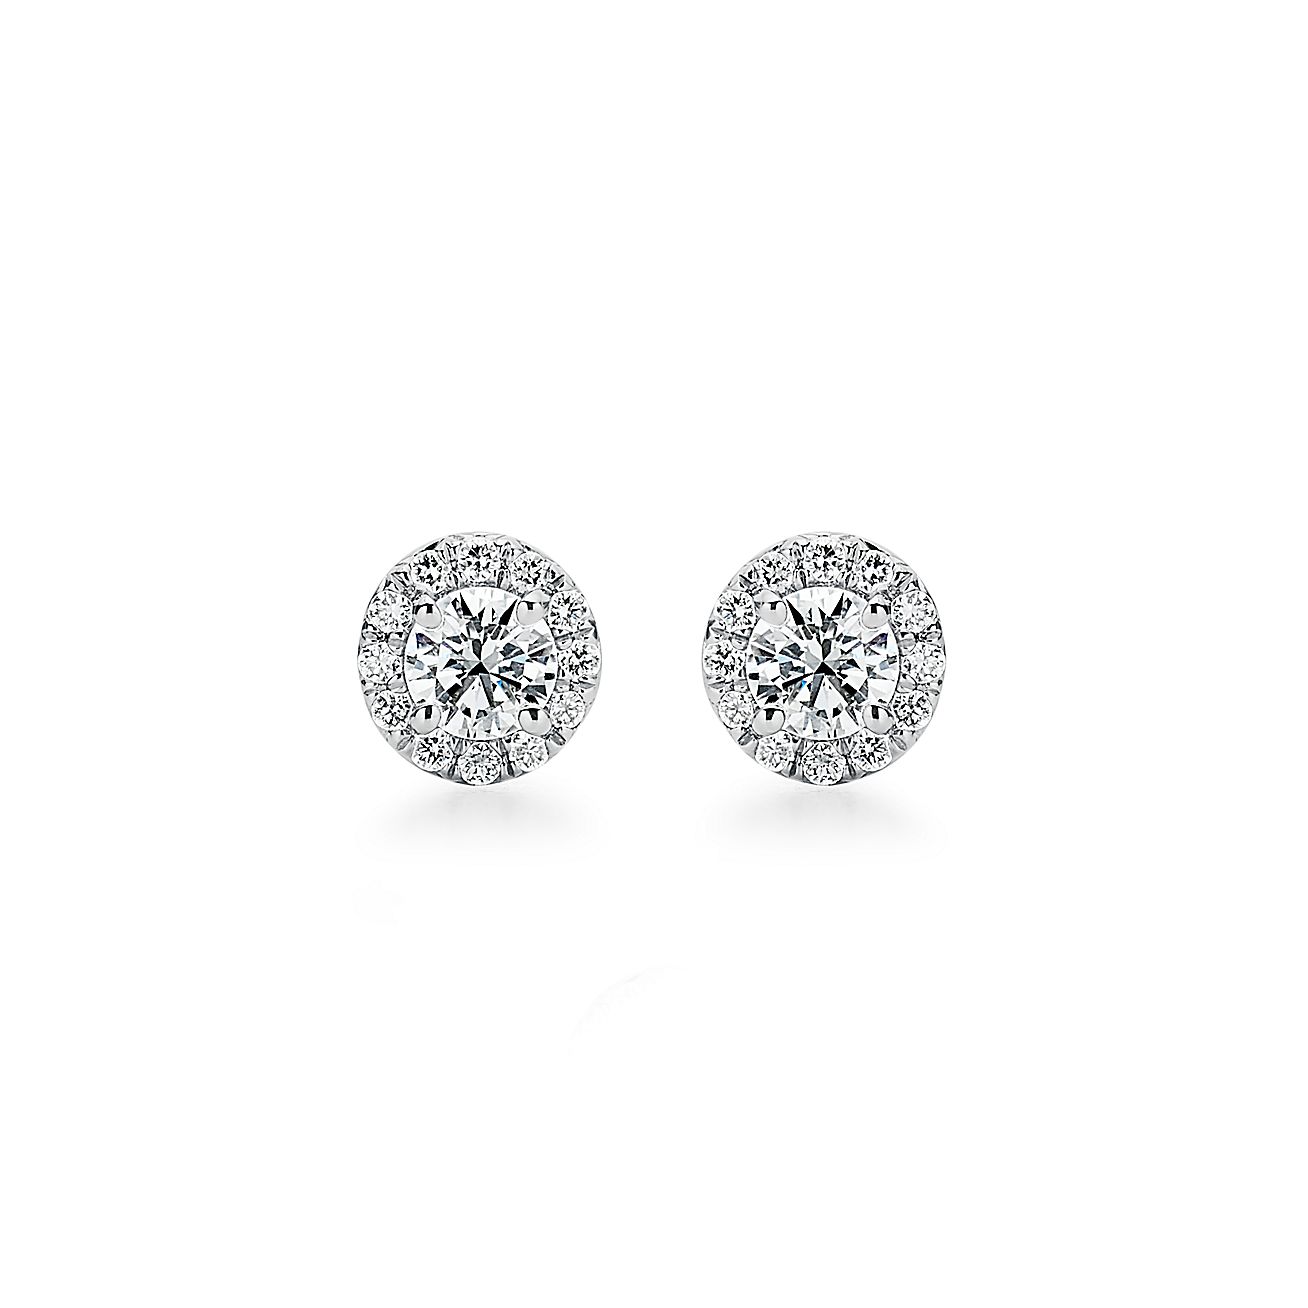 Tiffany Soleste® earrings in platinum with diamonds. | Tiffany & Co.